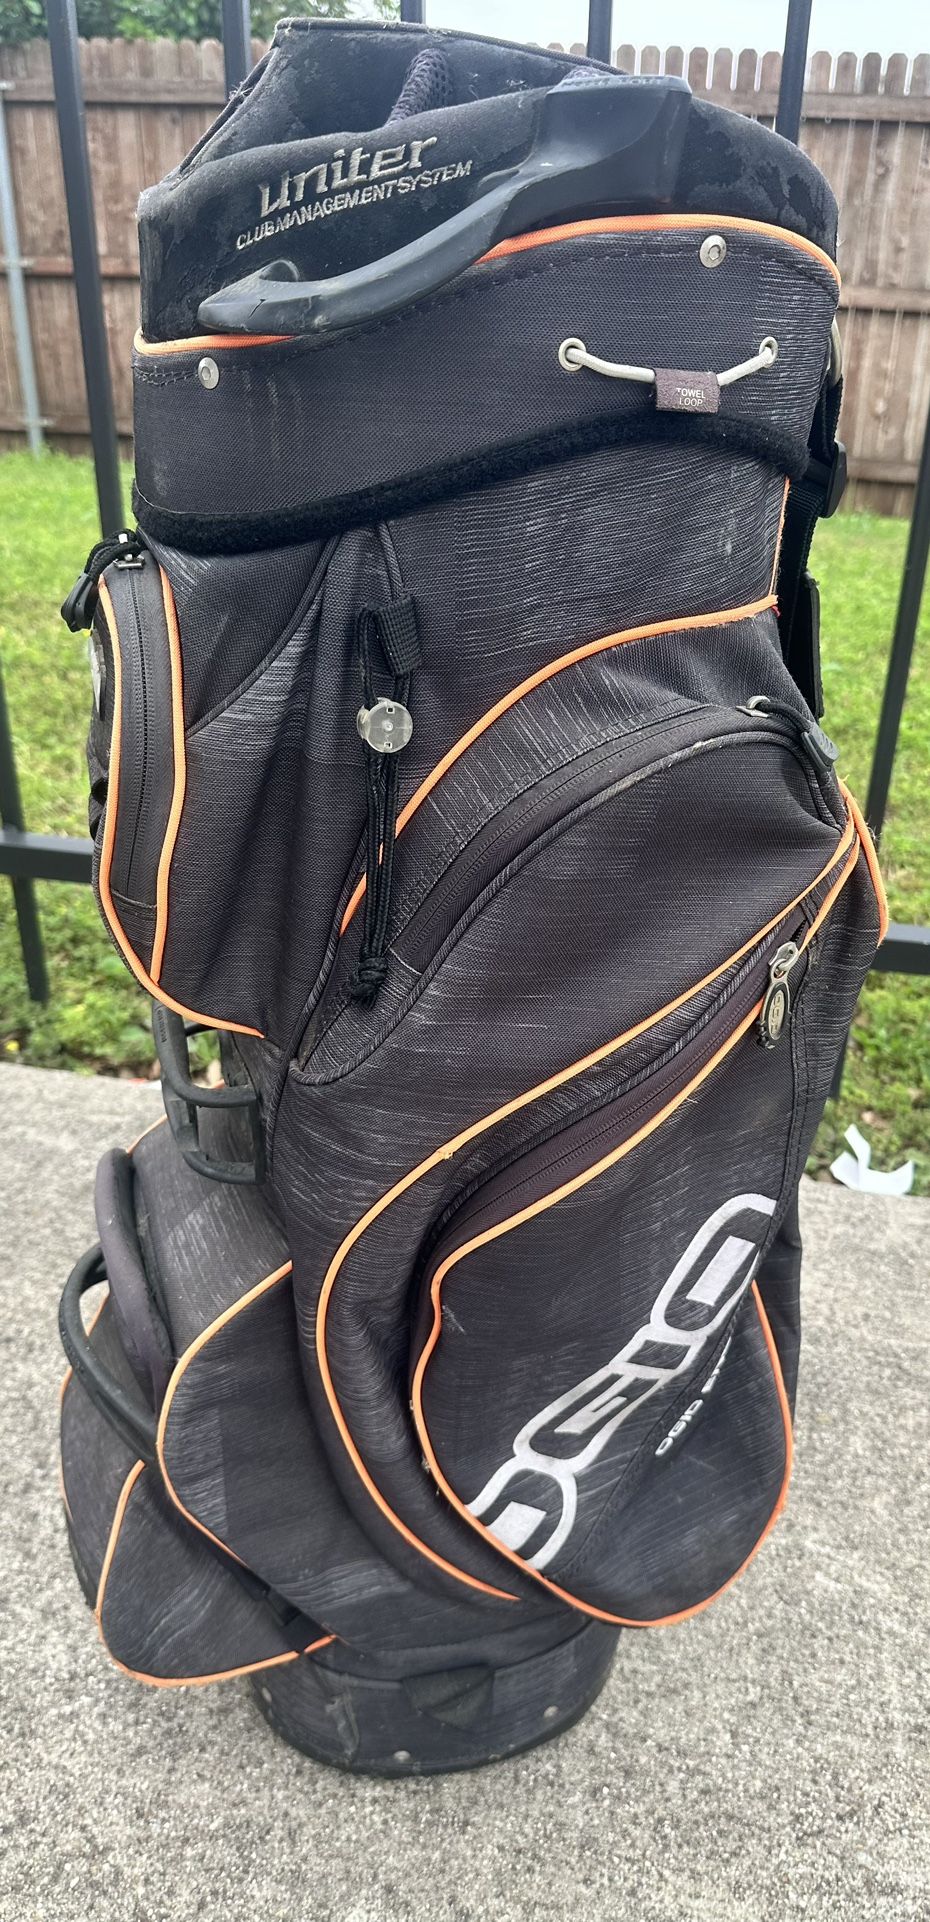 OGIO Uniter 15-Way divider Club Management System Cart Golf Bag Gray Orange